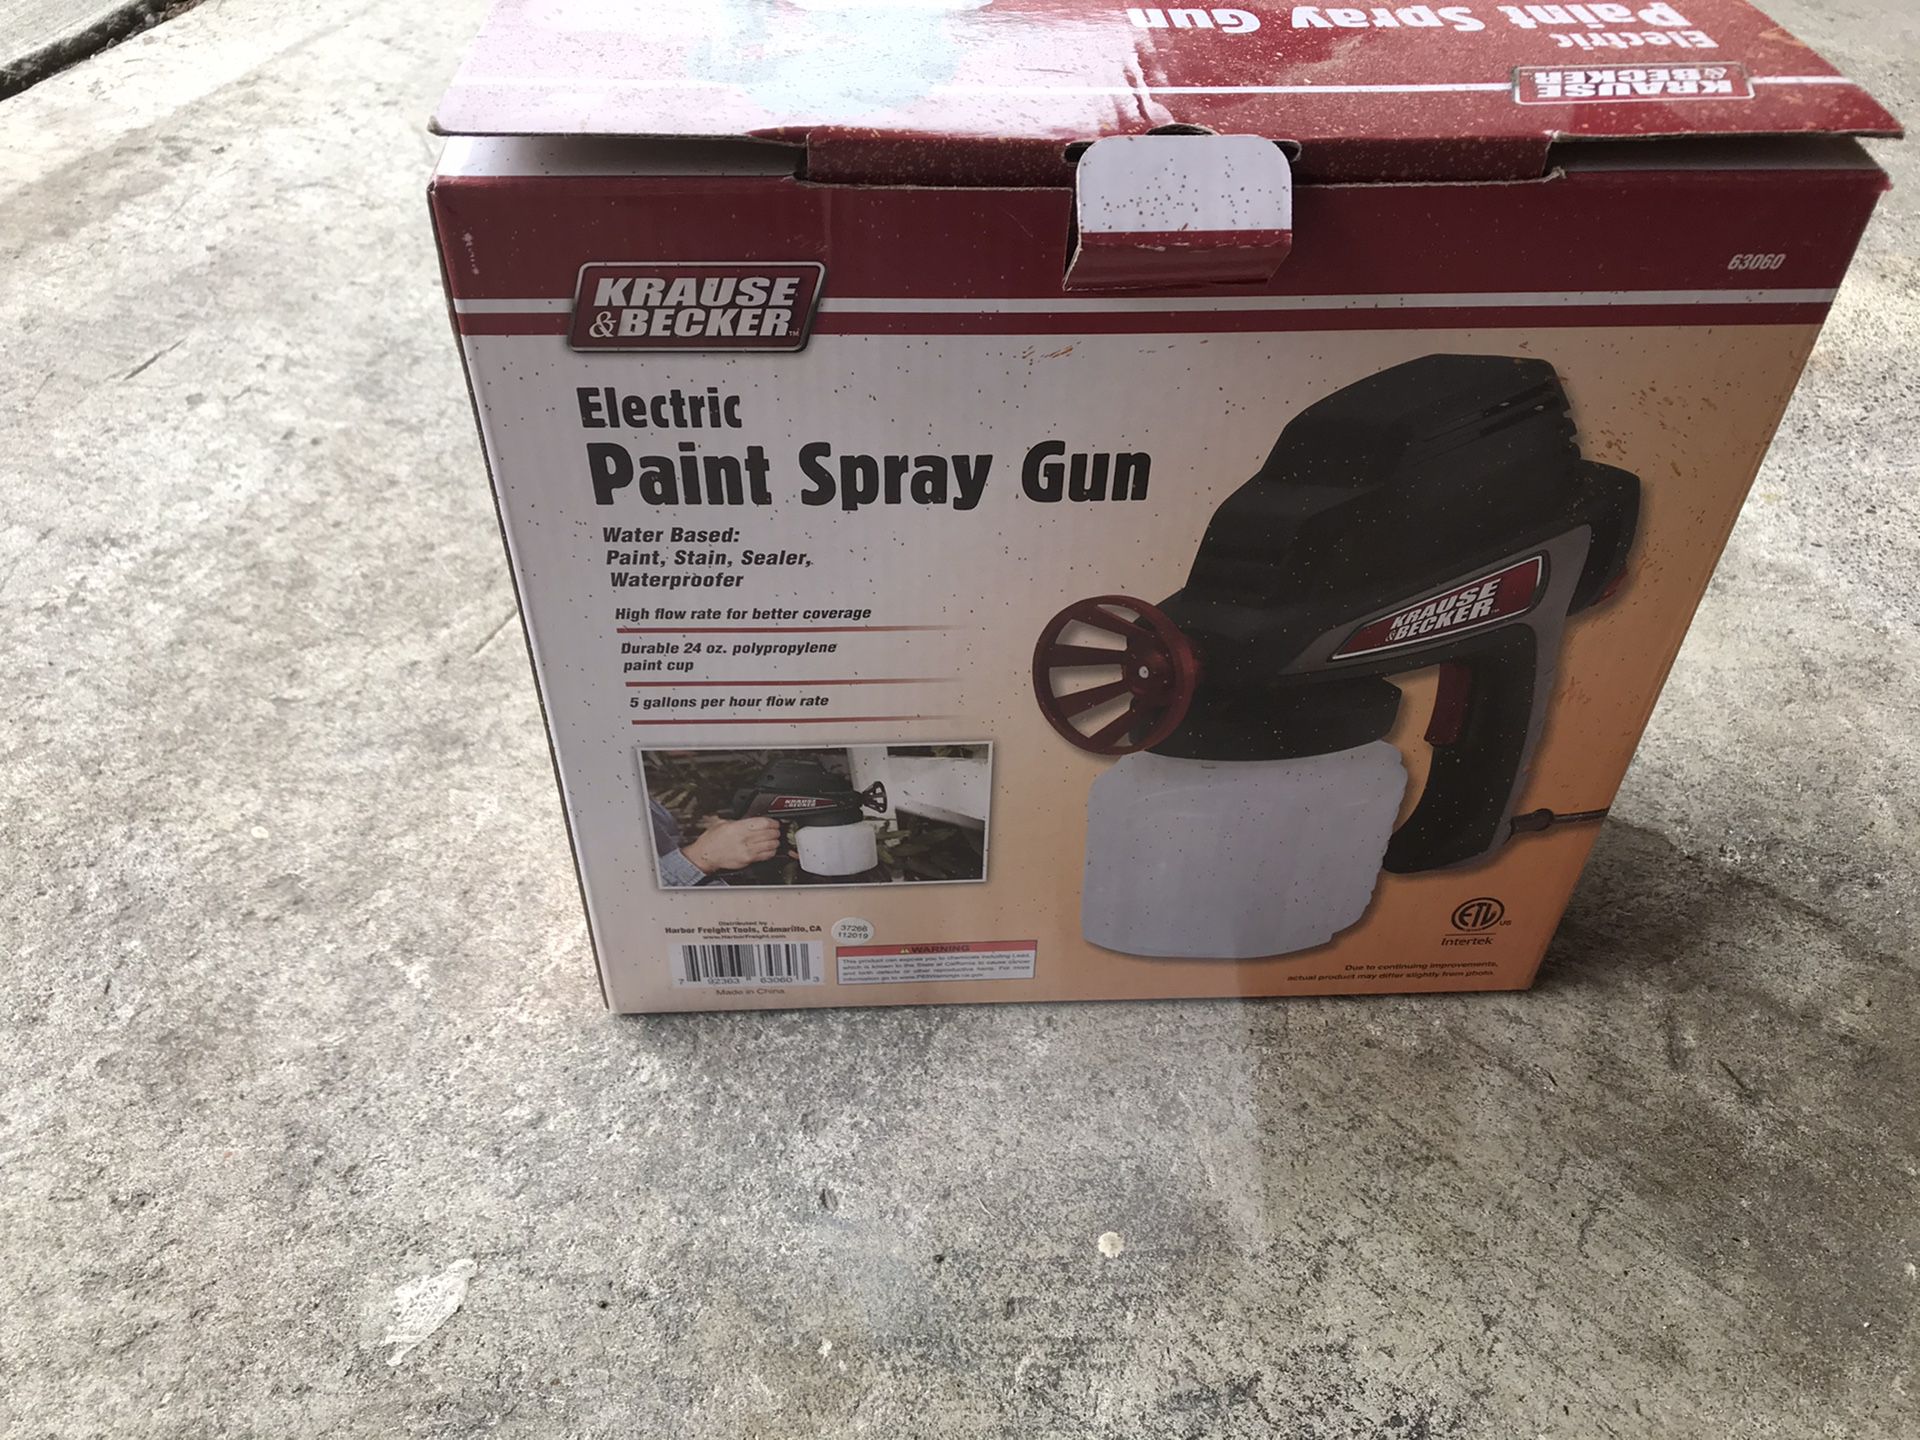 Electric paint spray gun